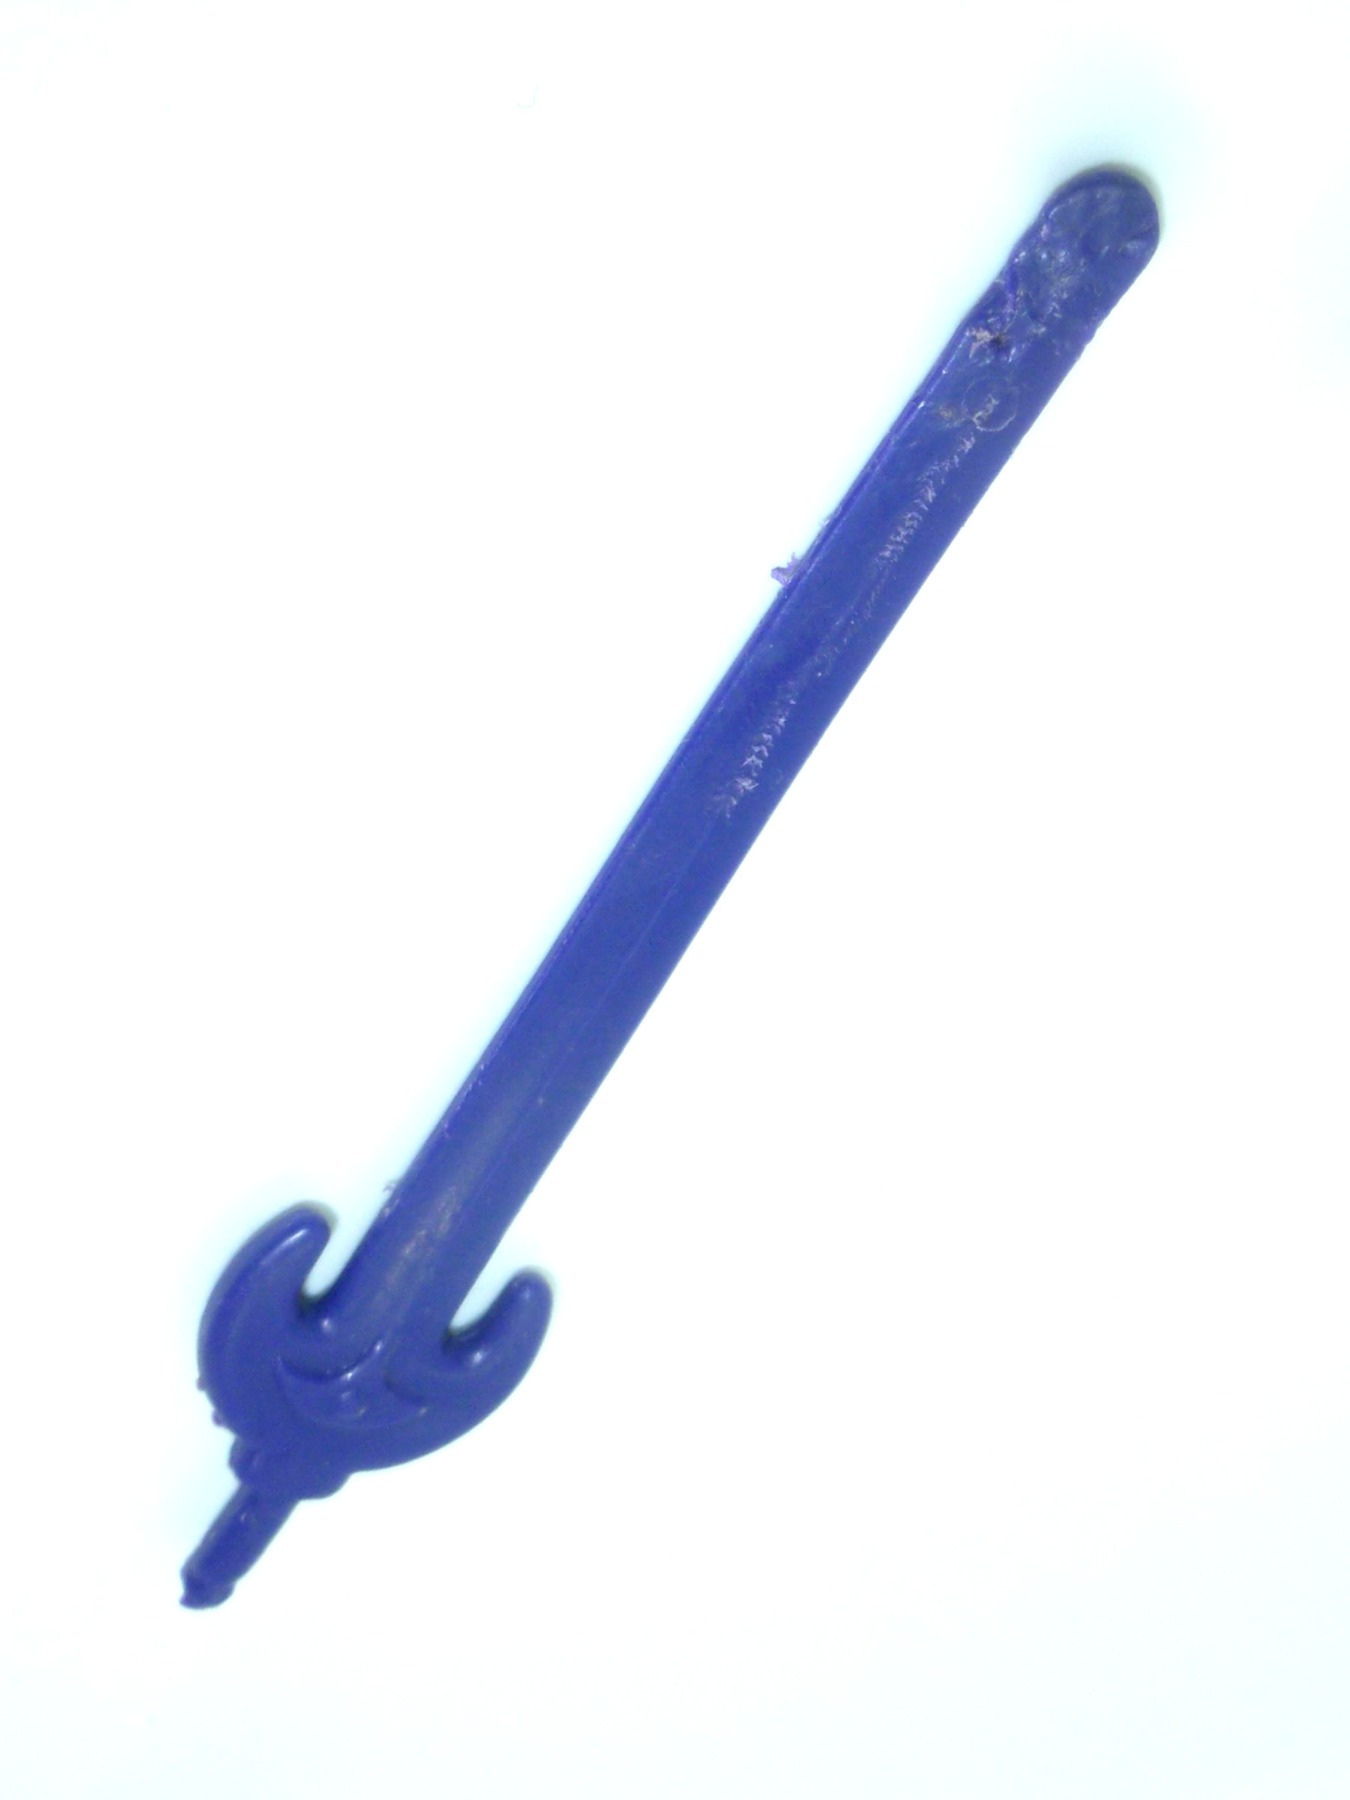 Fisto sword Malaysia